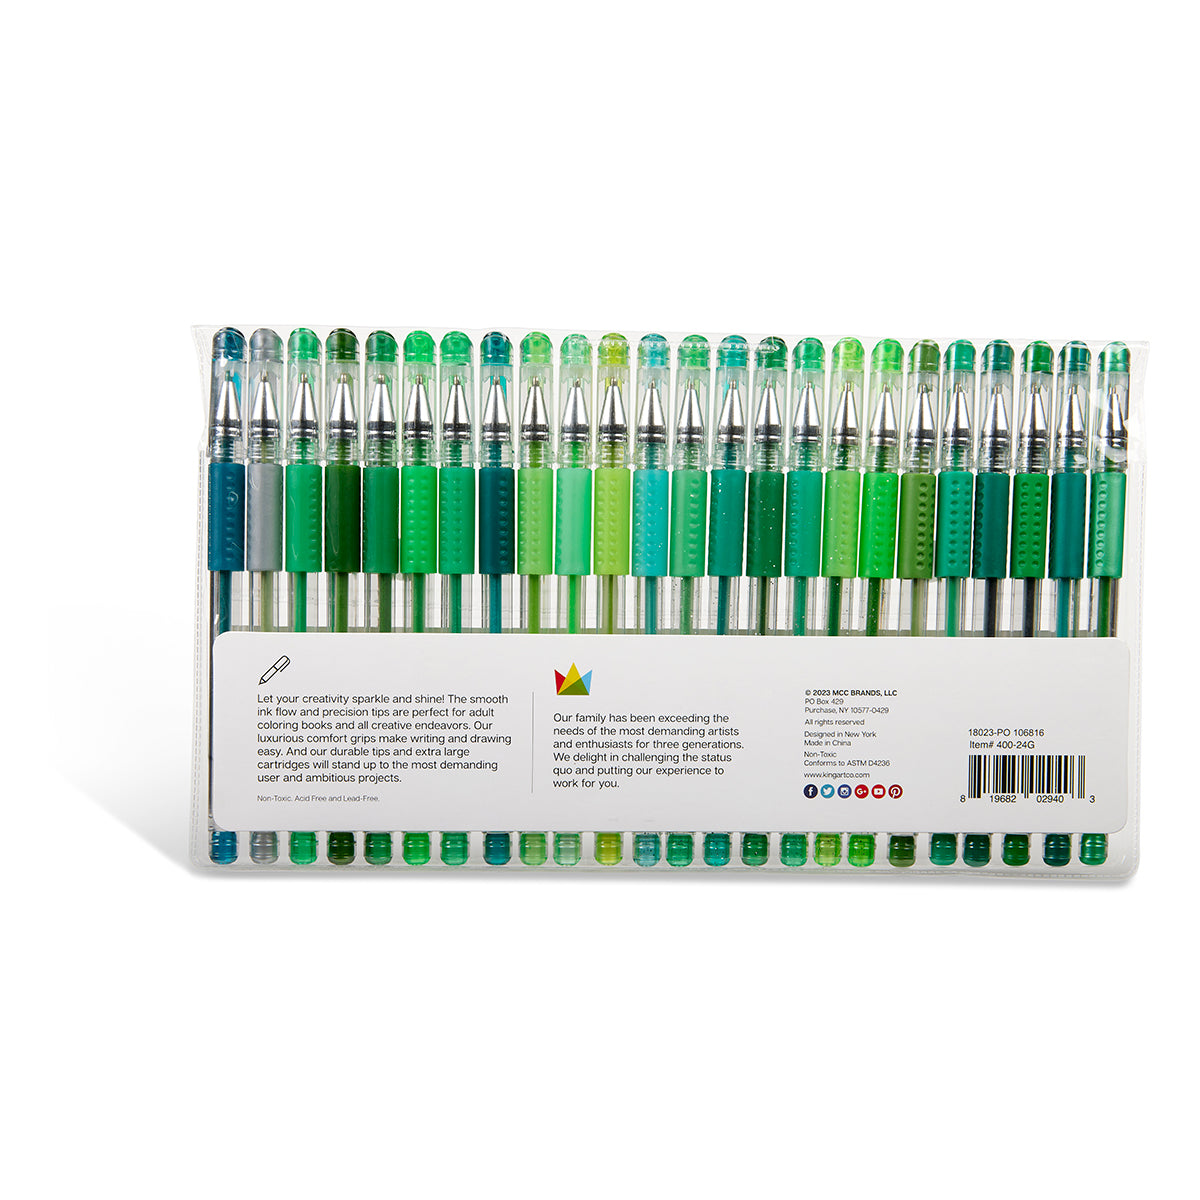 100 Colors Glitter Gel Pen Set, 30% More Ink Neon Glitter Coloring